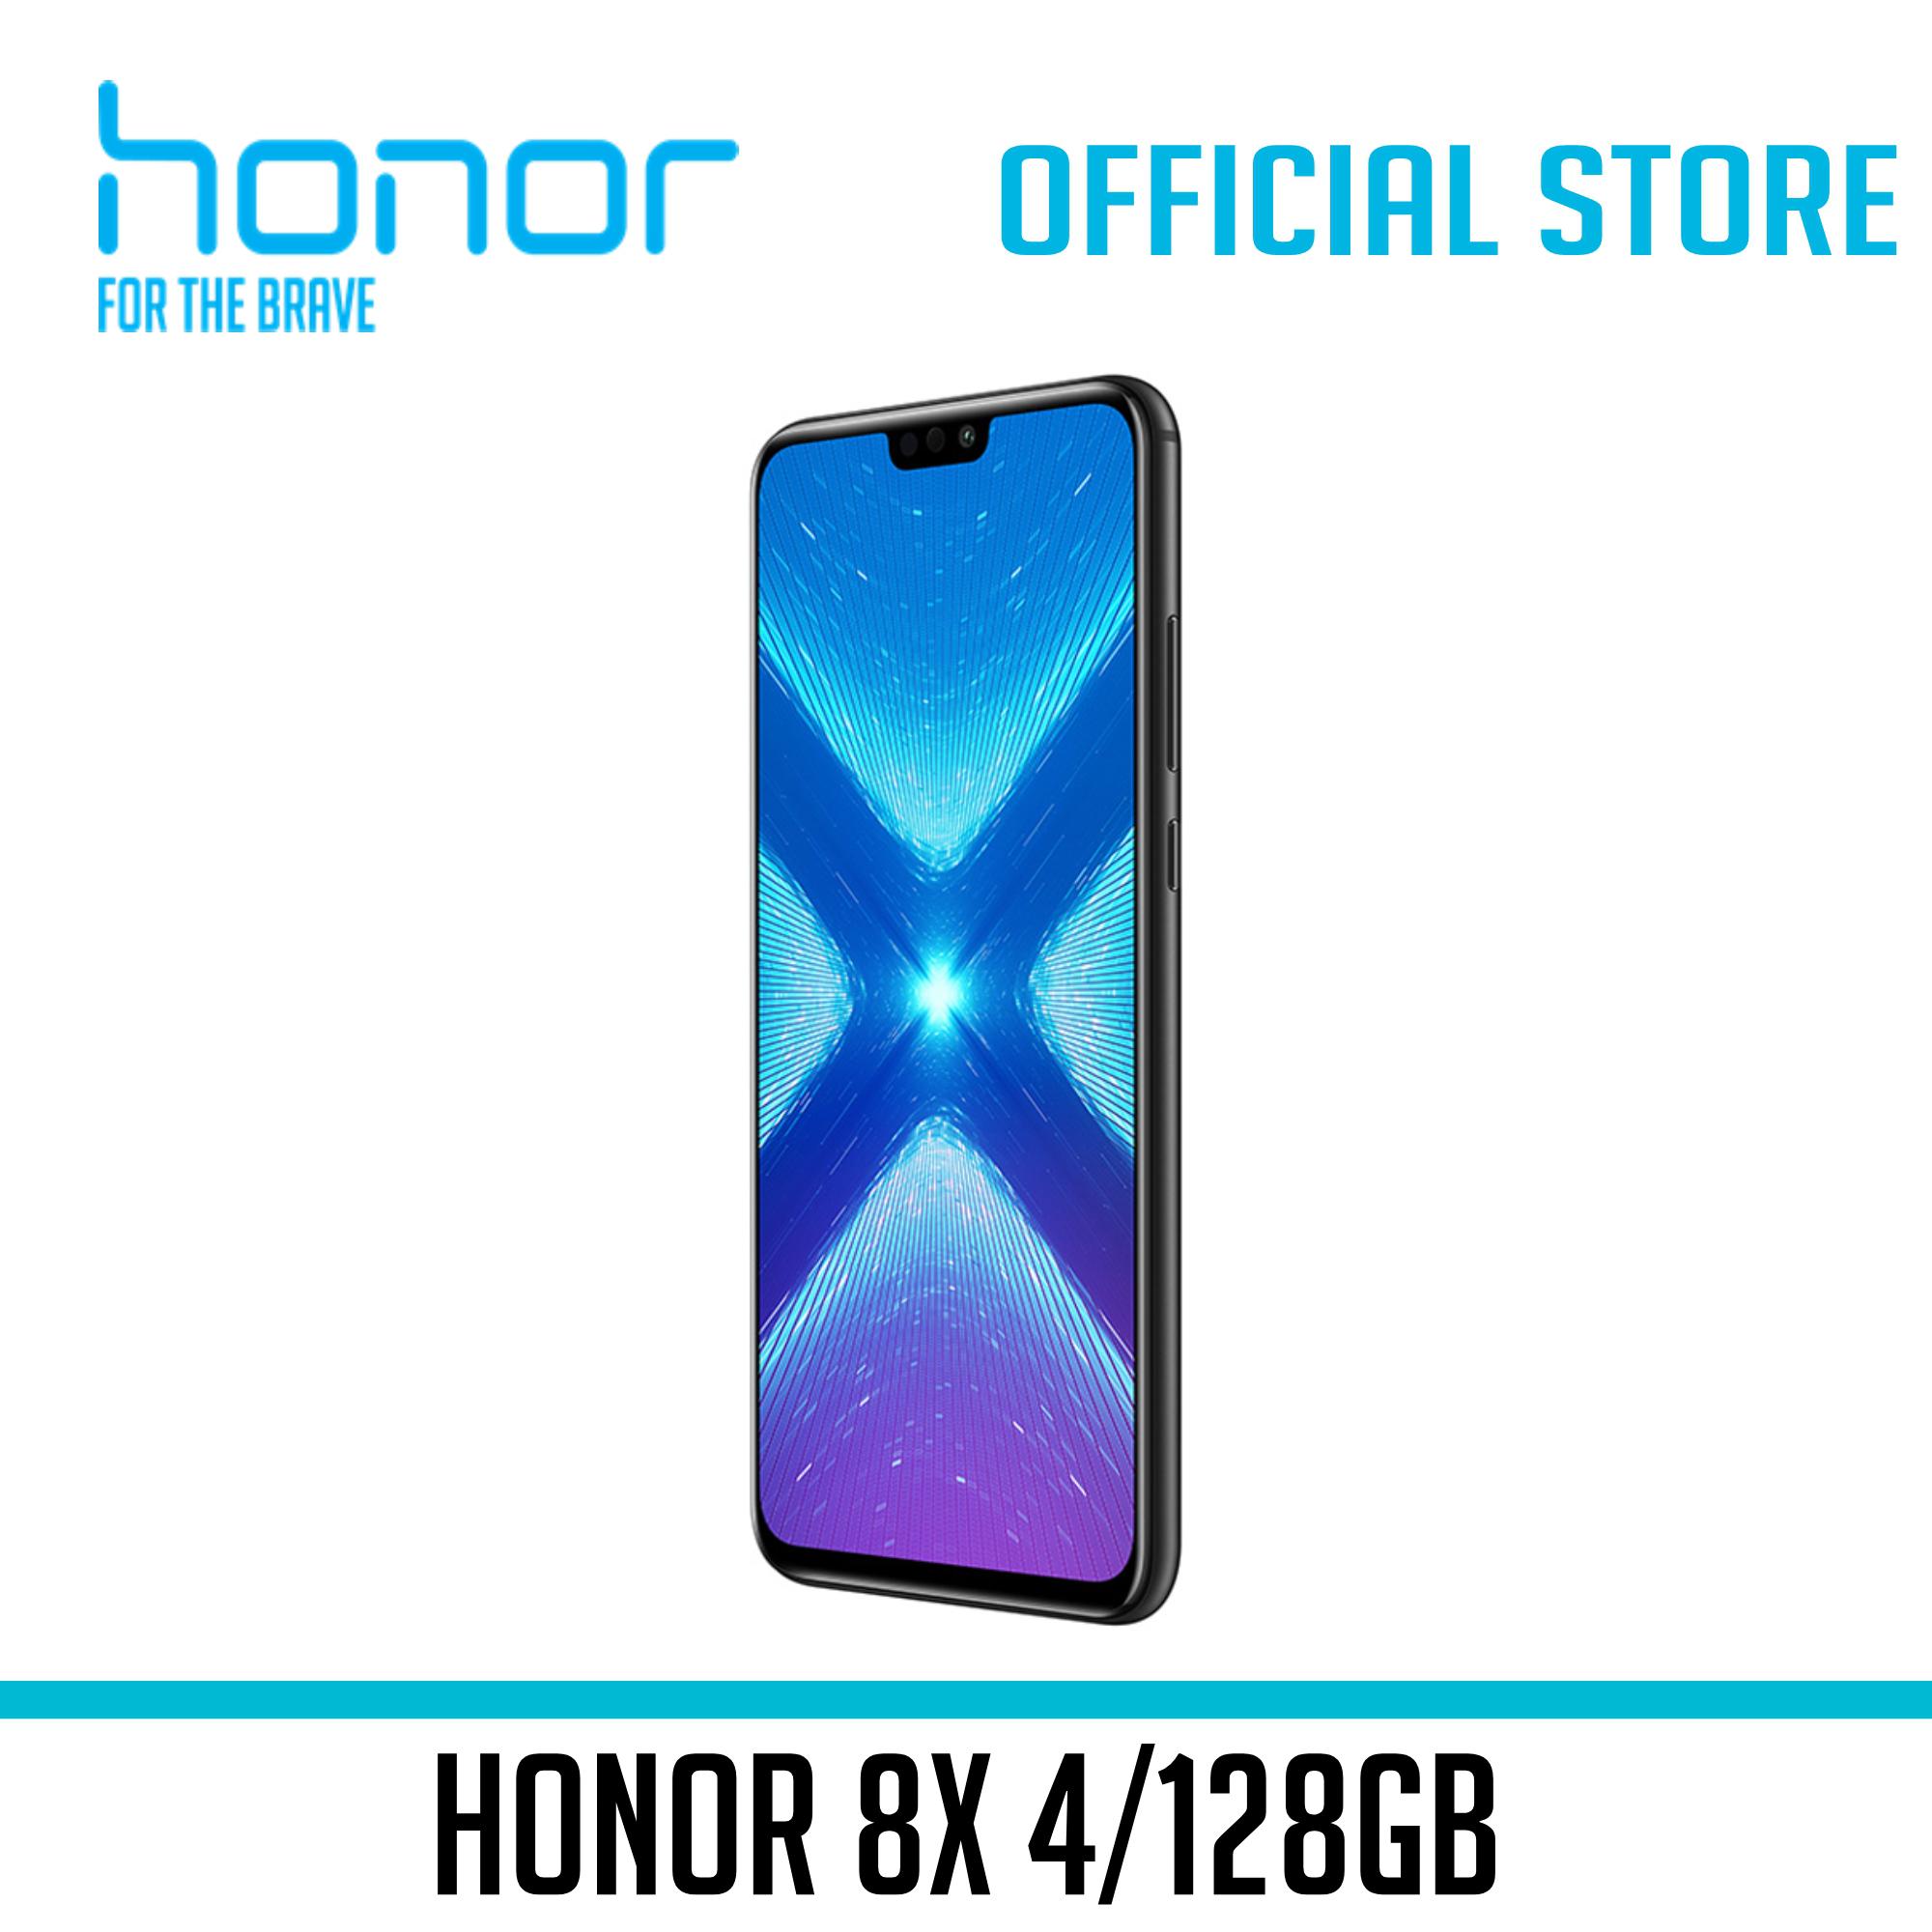 Honor 8X 4/128GB - Free Honor 8x Exclusive Gift Box